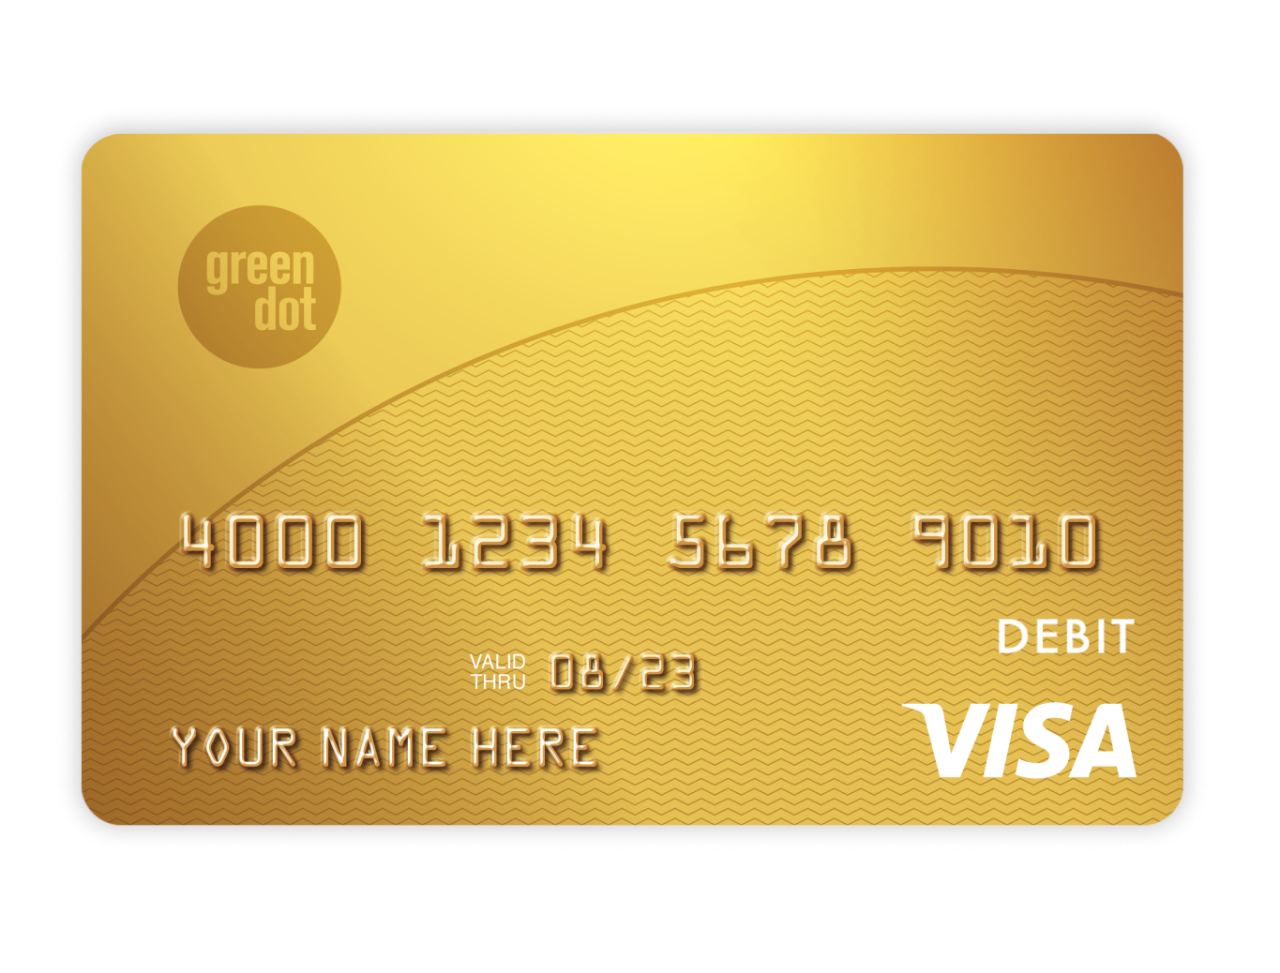 Green Dot Prepaid Visa Card Review | Bankrate